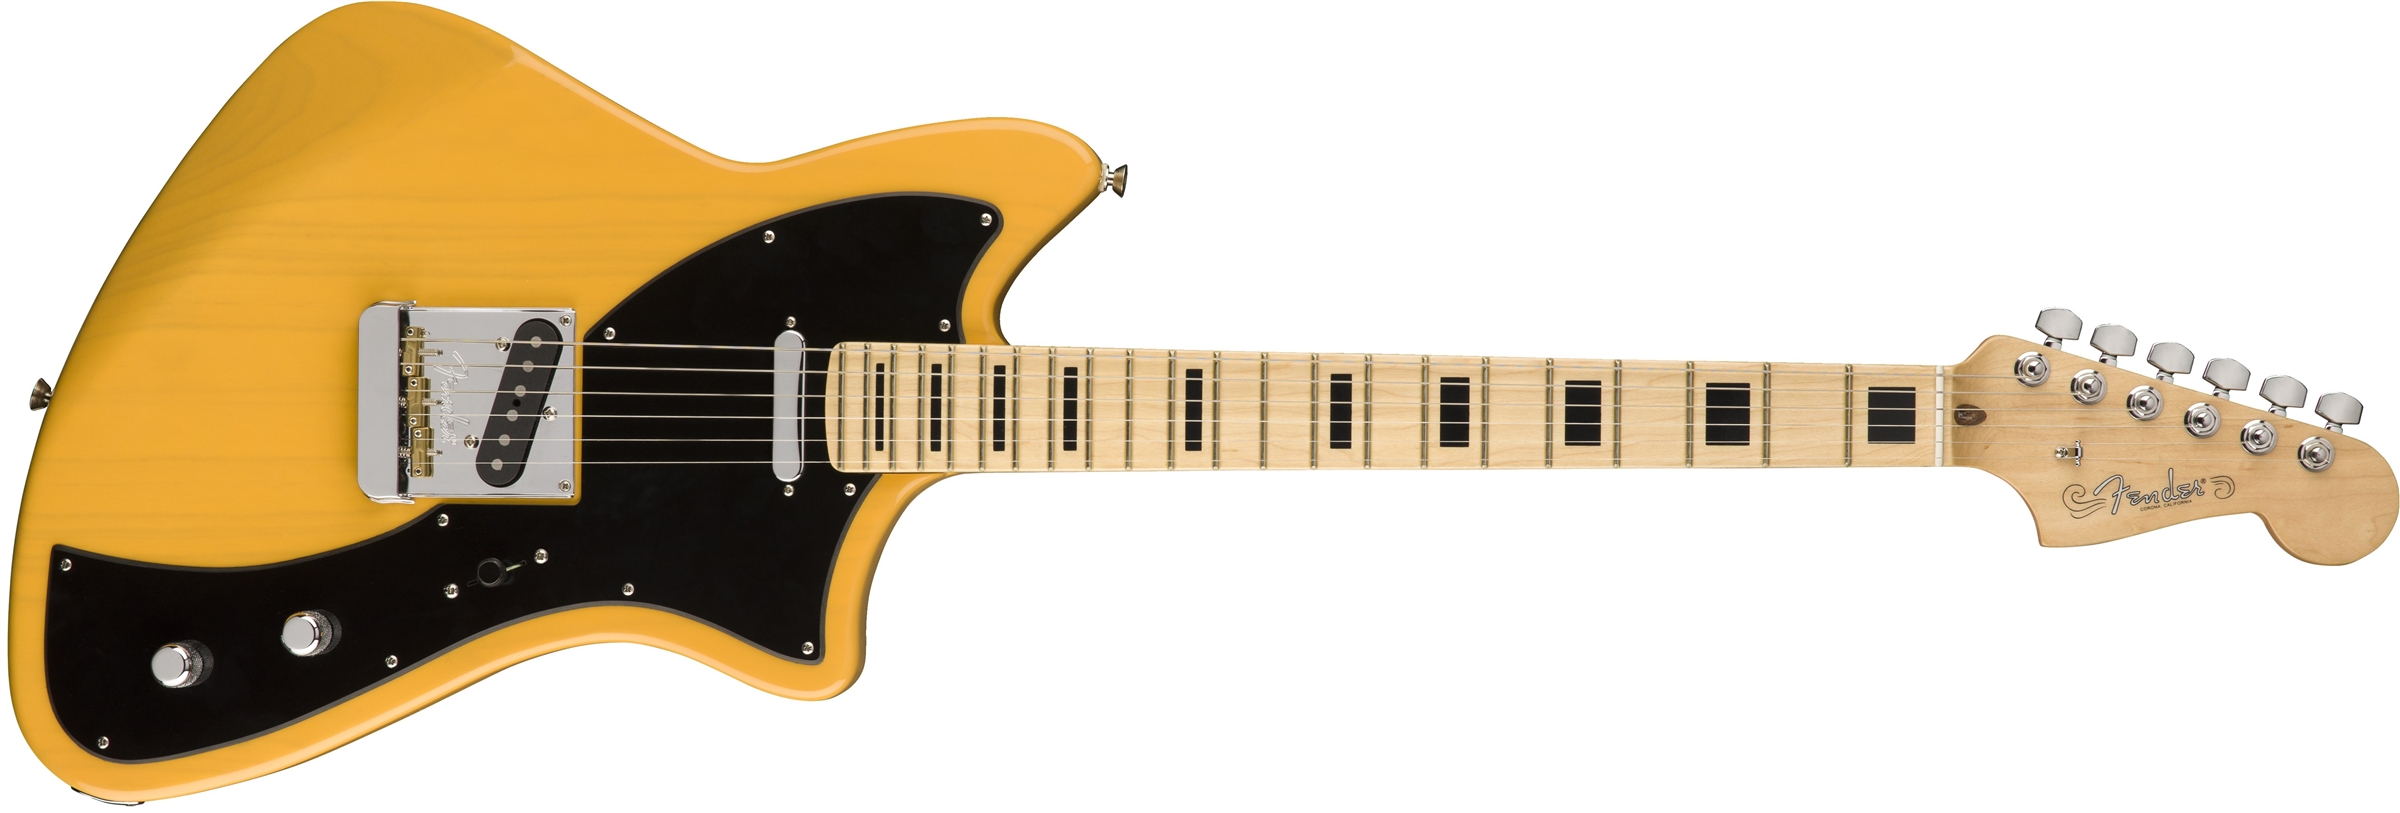 Fender’s Meteora guitar is a Parallel Universe Jazzmaster